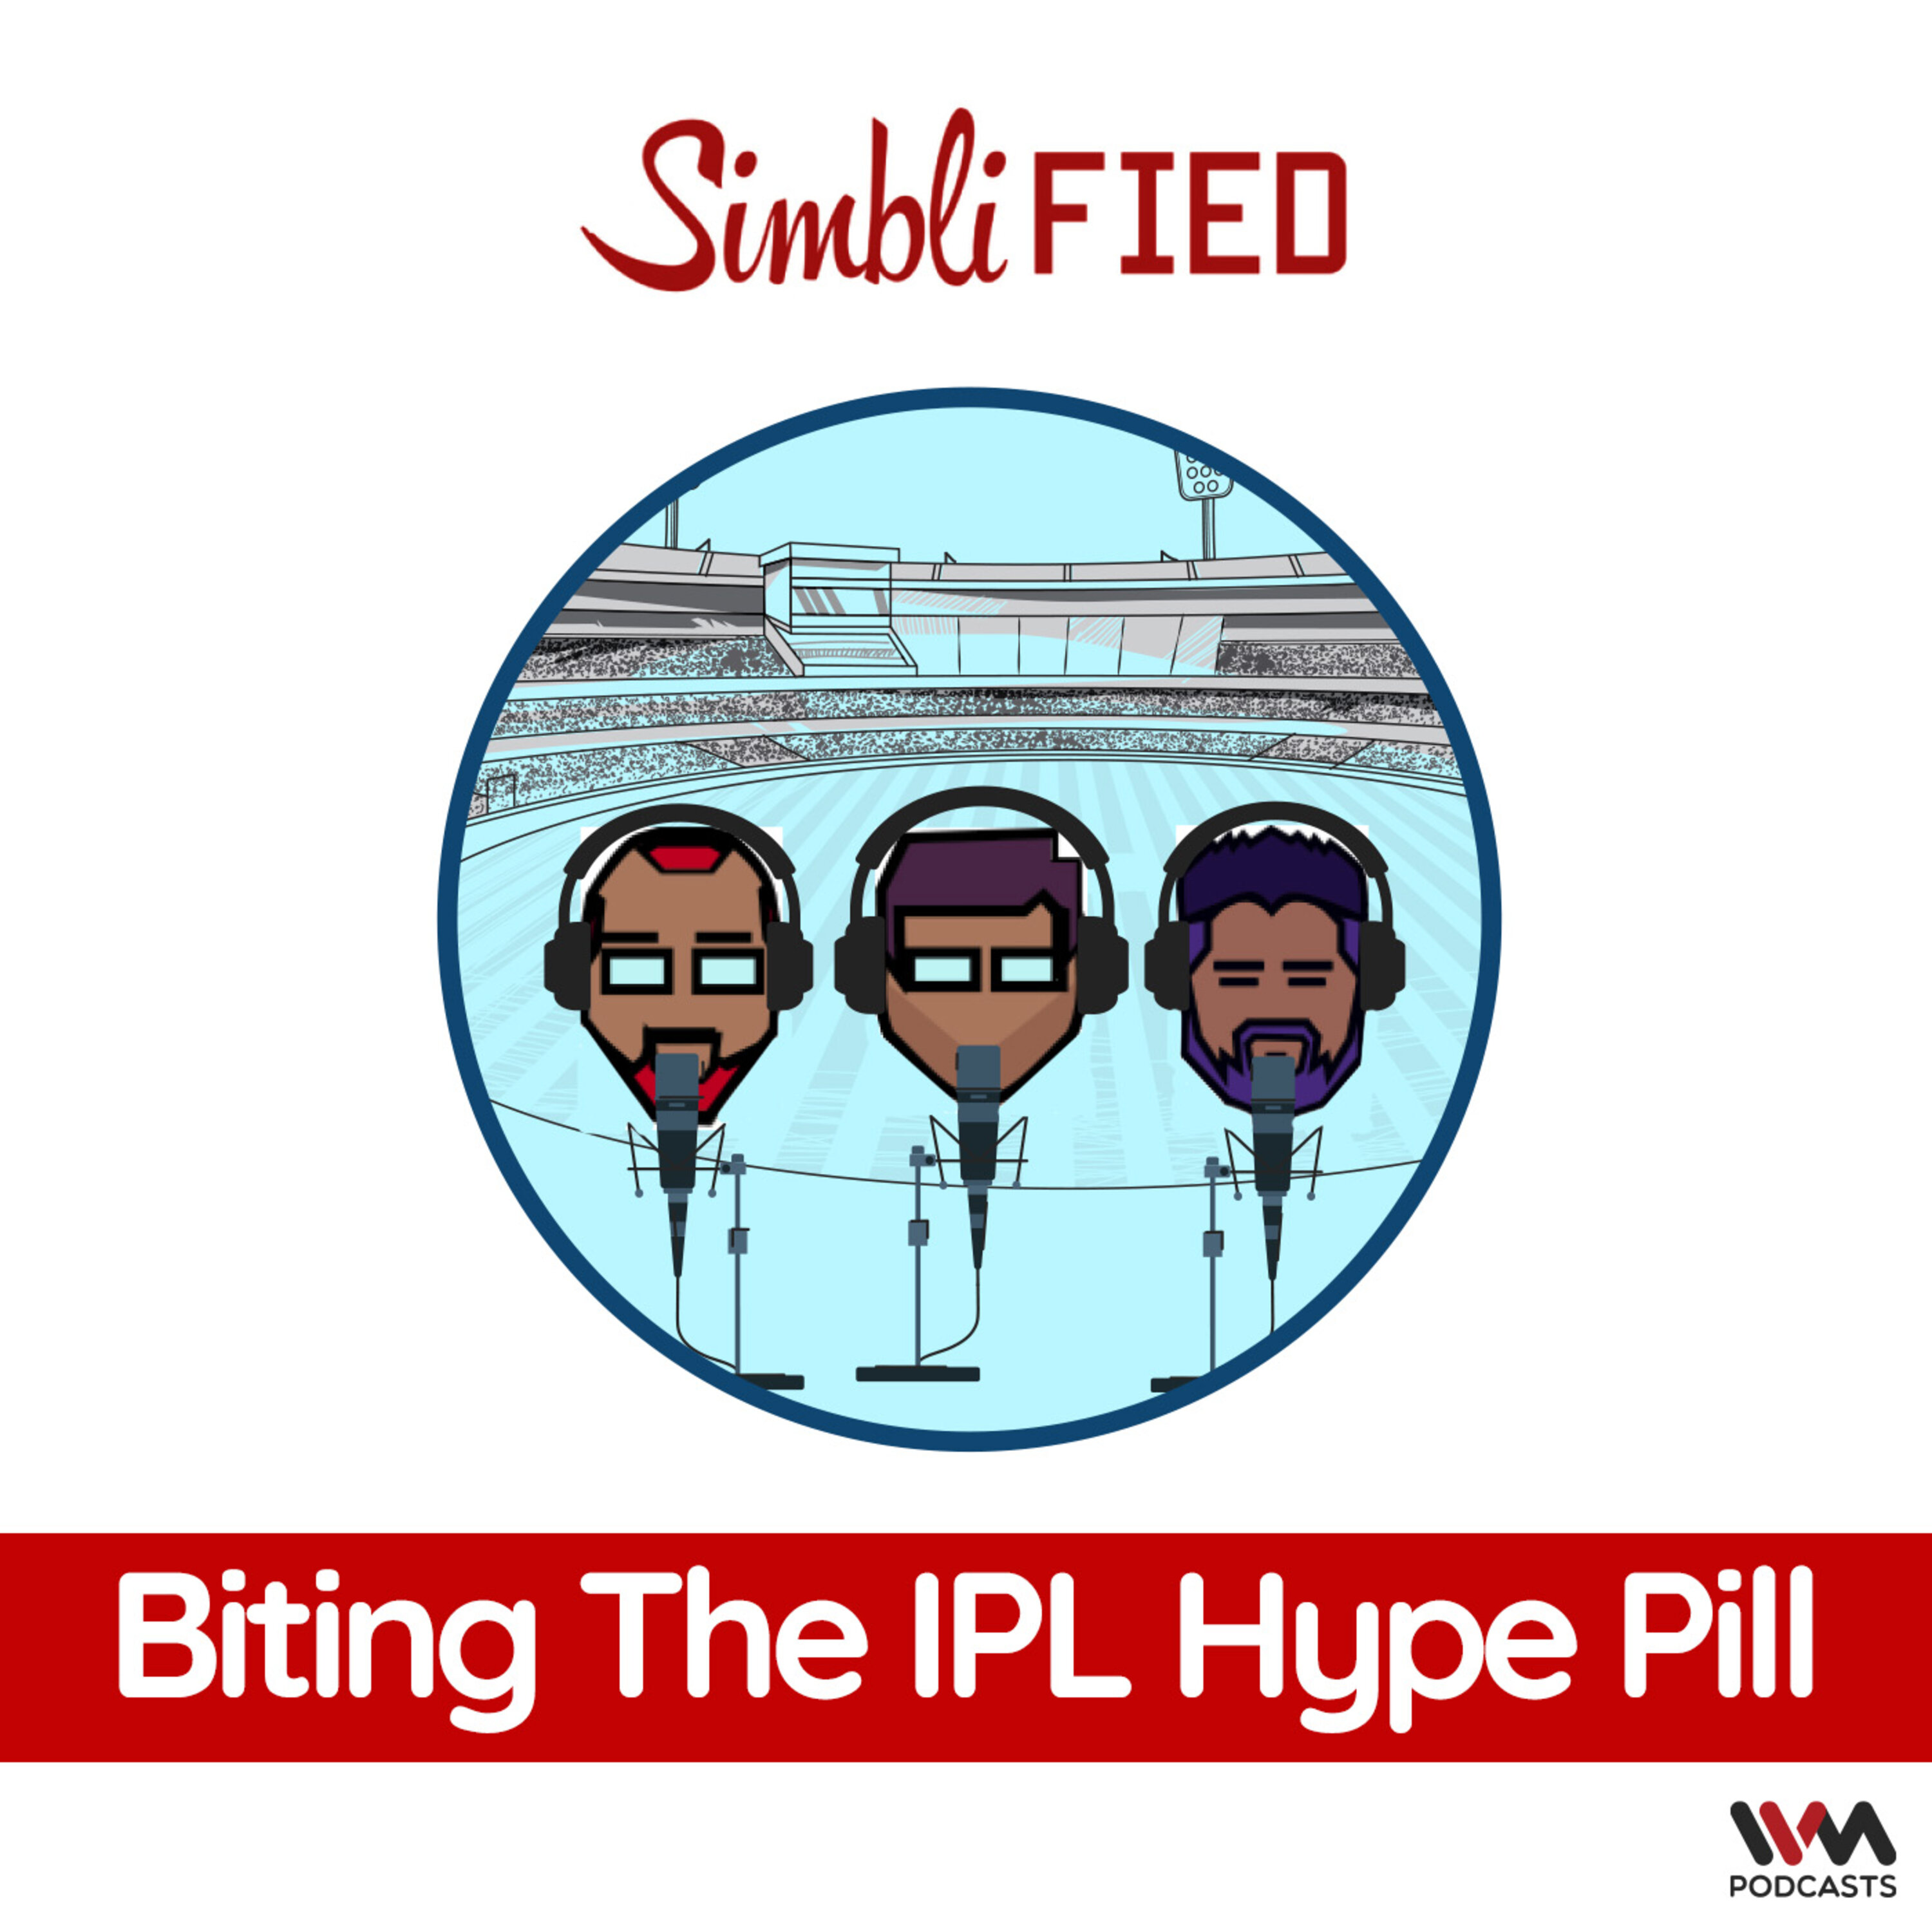 Biting the IPL hype pill